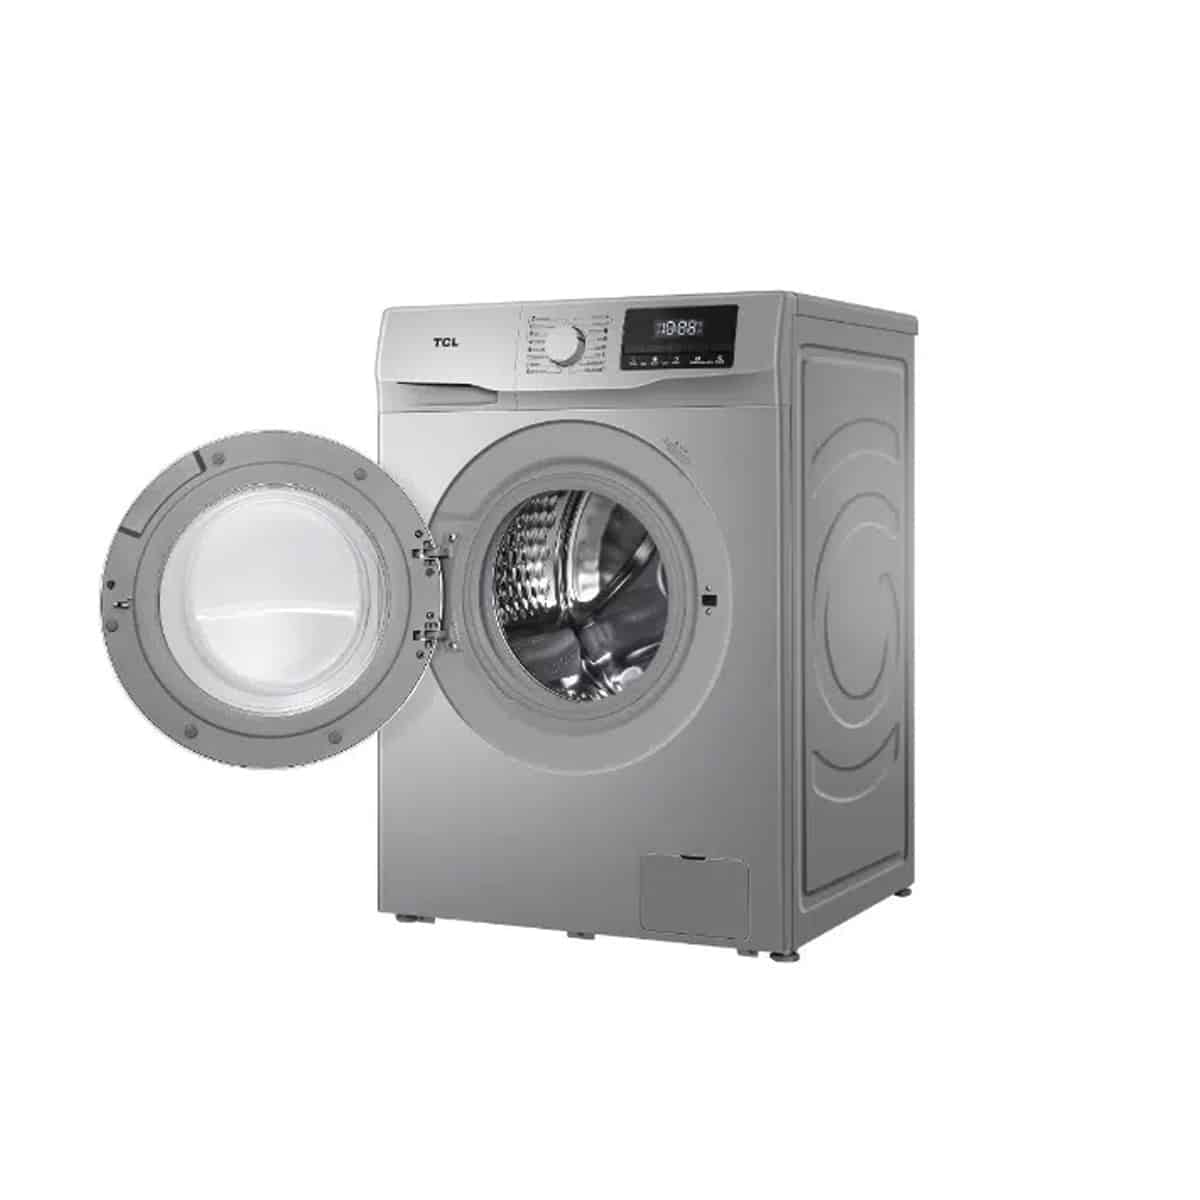 TCL 9kg Front Loading Washing Machine P609FL